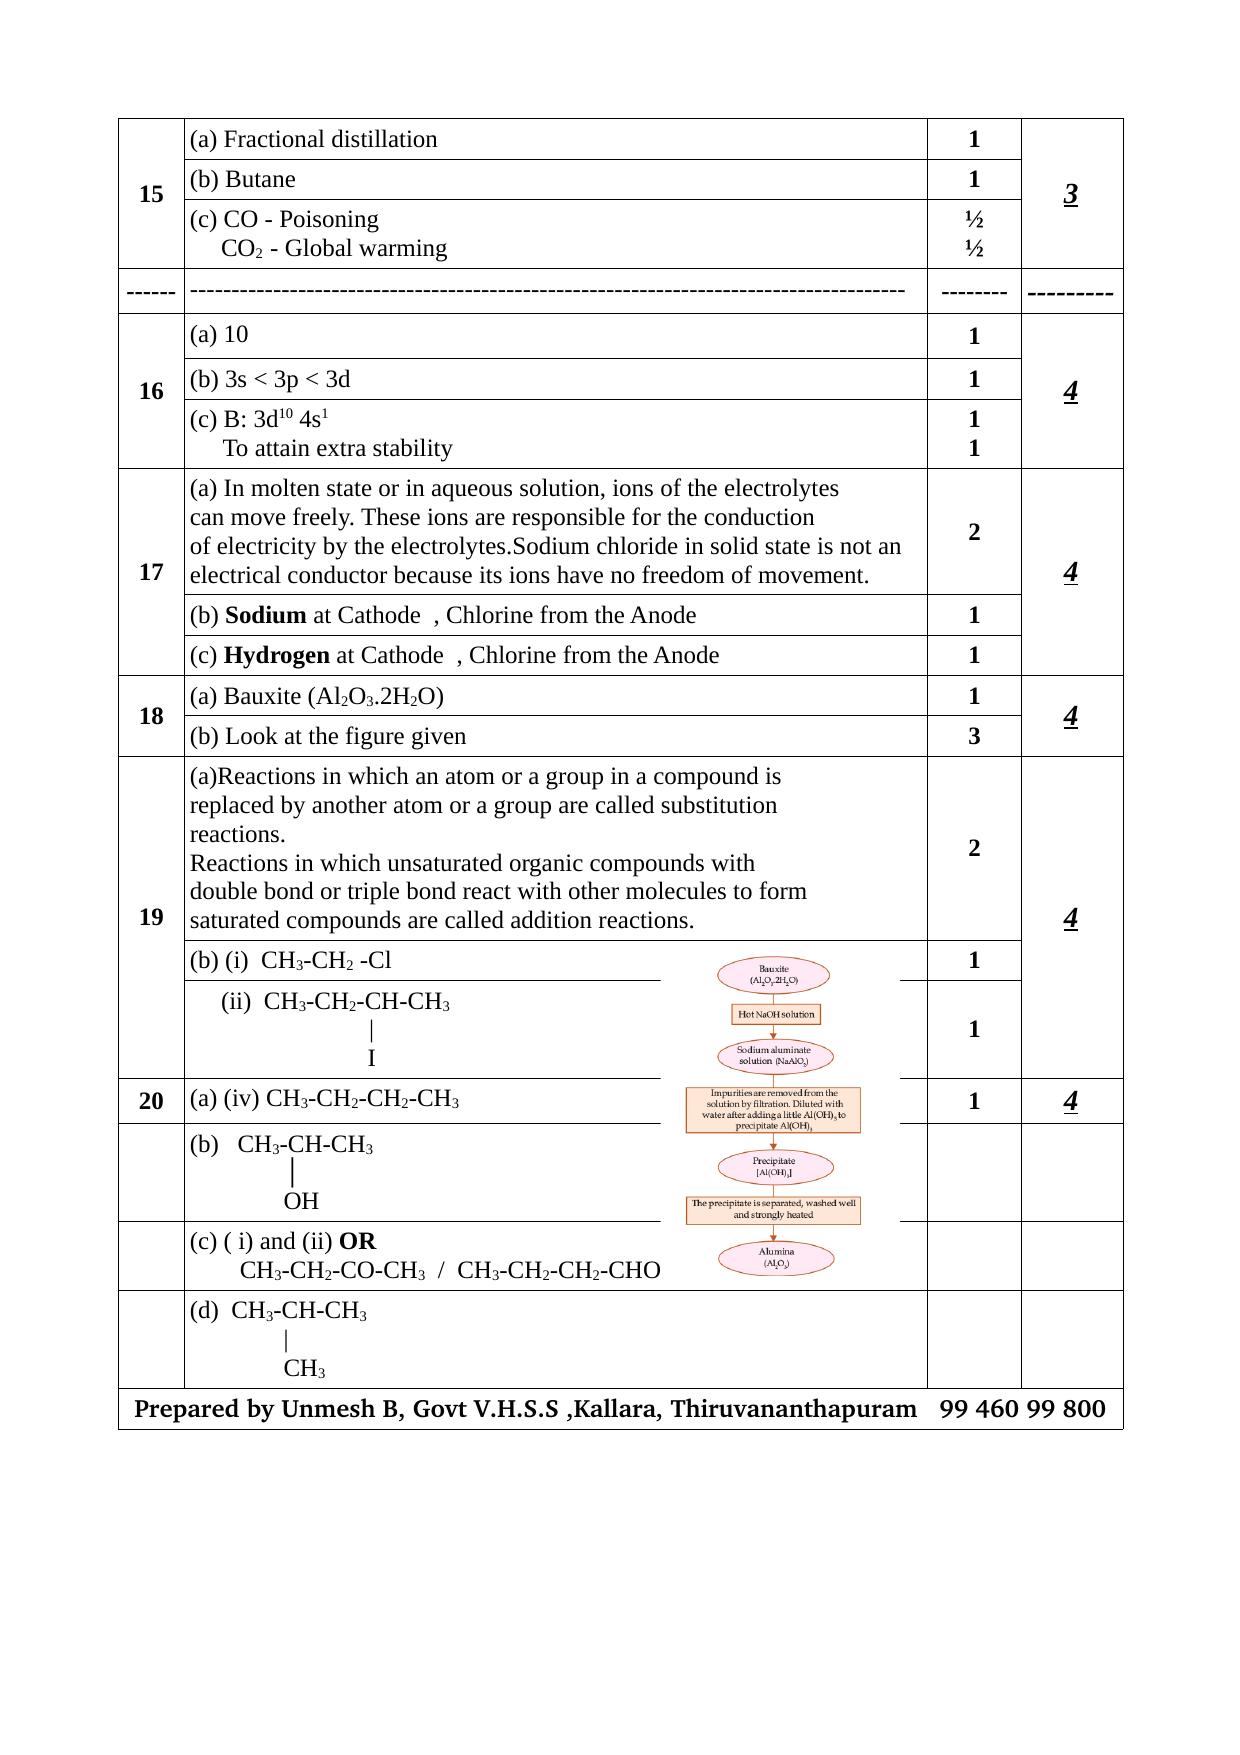 Kerala SSLC 2018 Chemistry Answer Key (EM) - Page 2